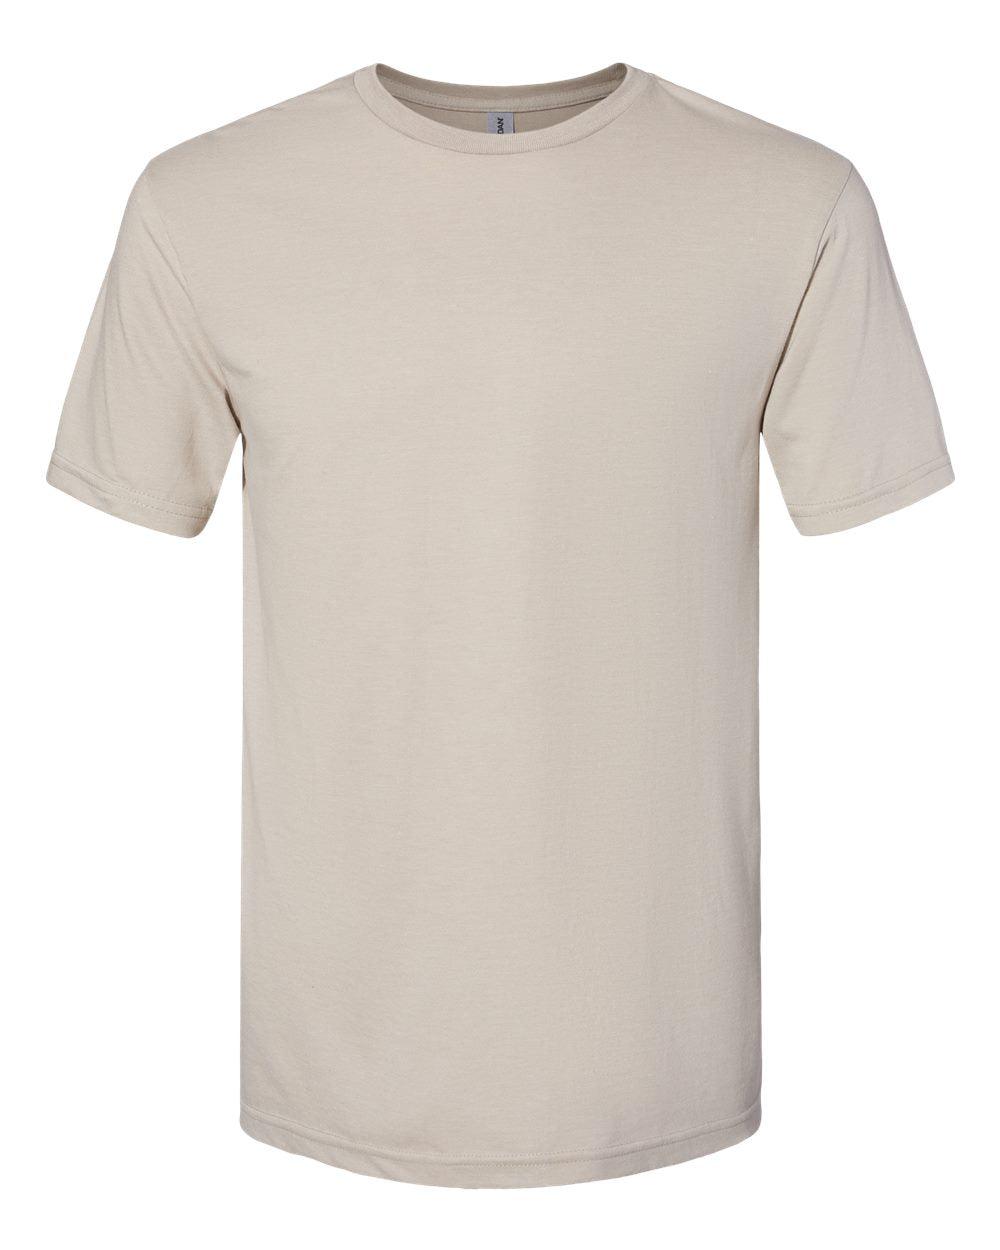 Softstyle® CVC T-Shirt - 67000 - Gildan - Leatherwood Trading Post